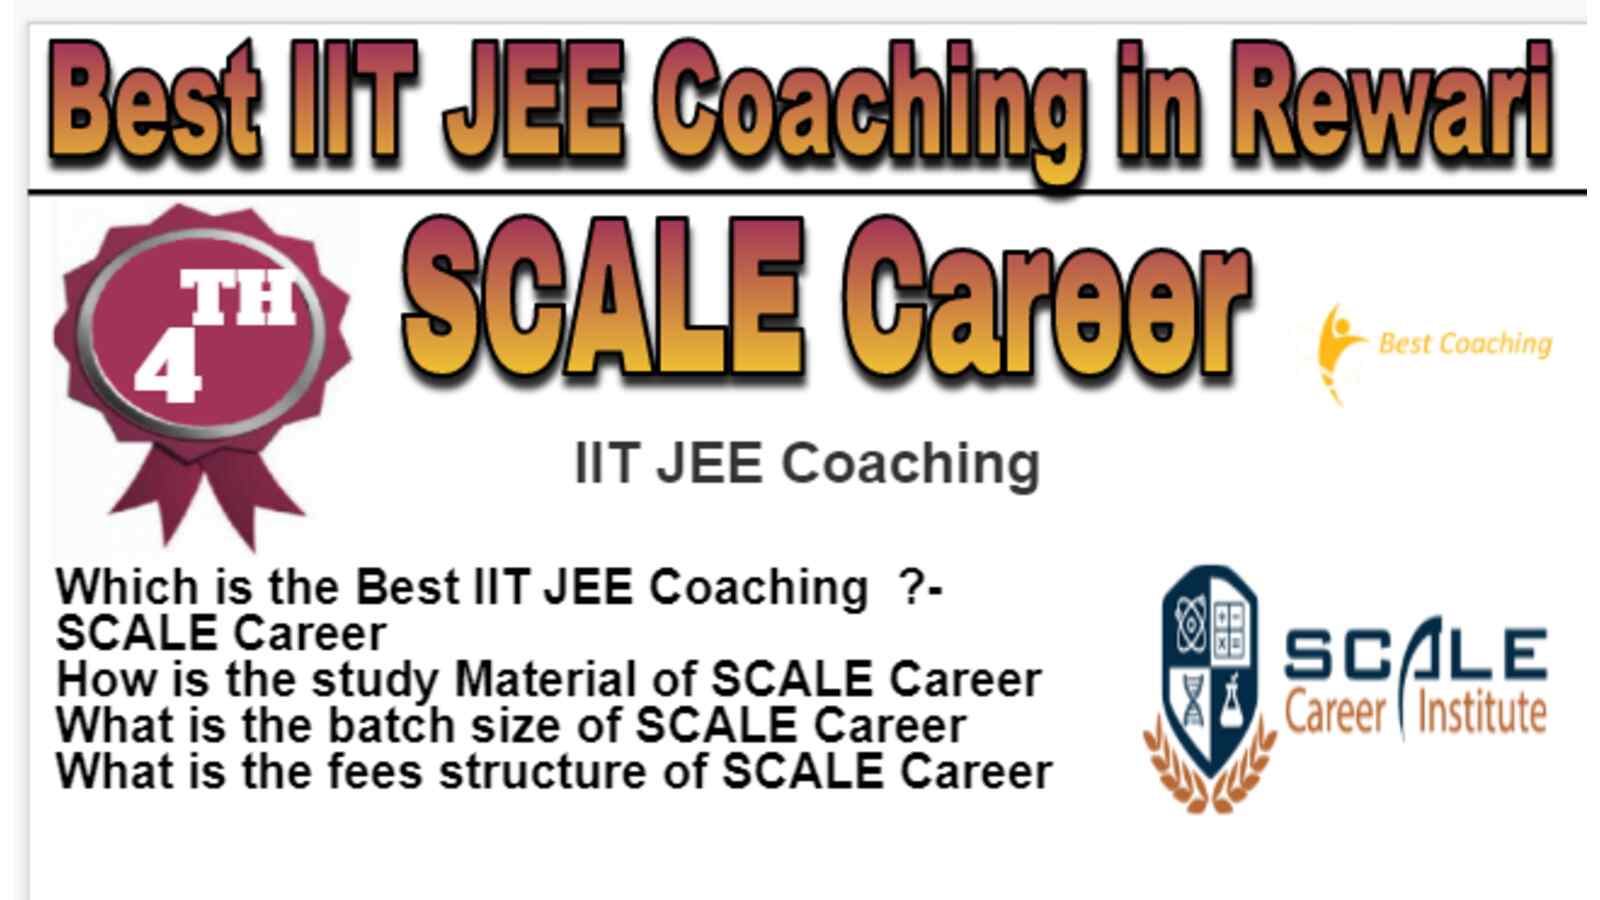 Rank 4 Best IIT JEE Coaching in Rewari